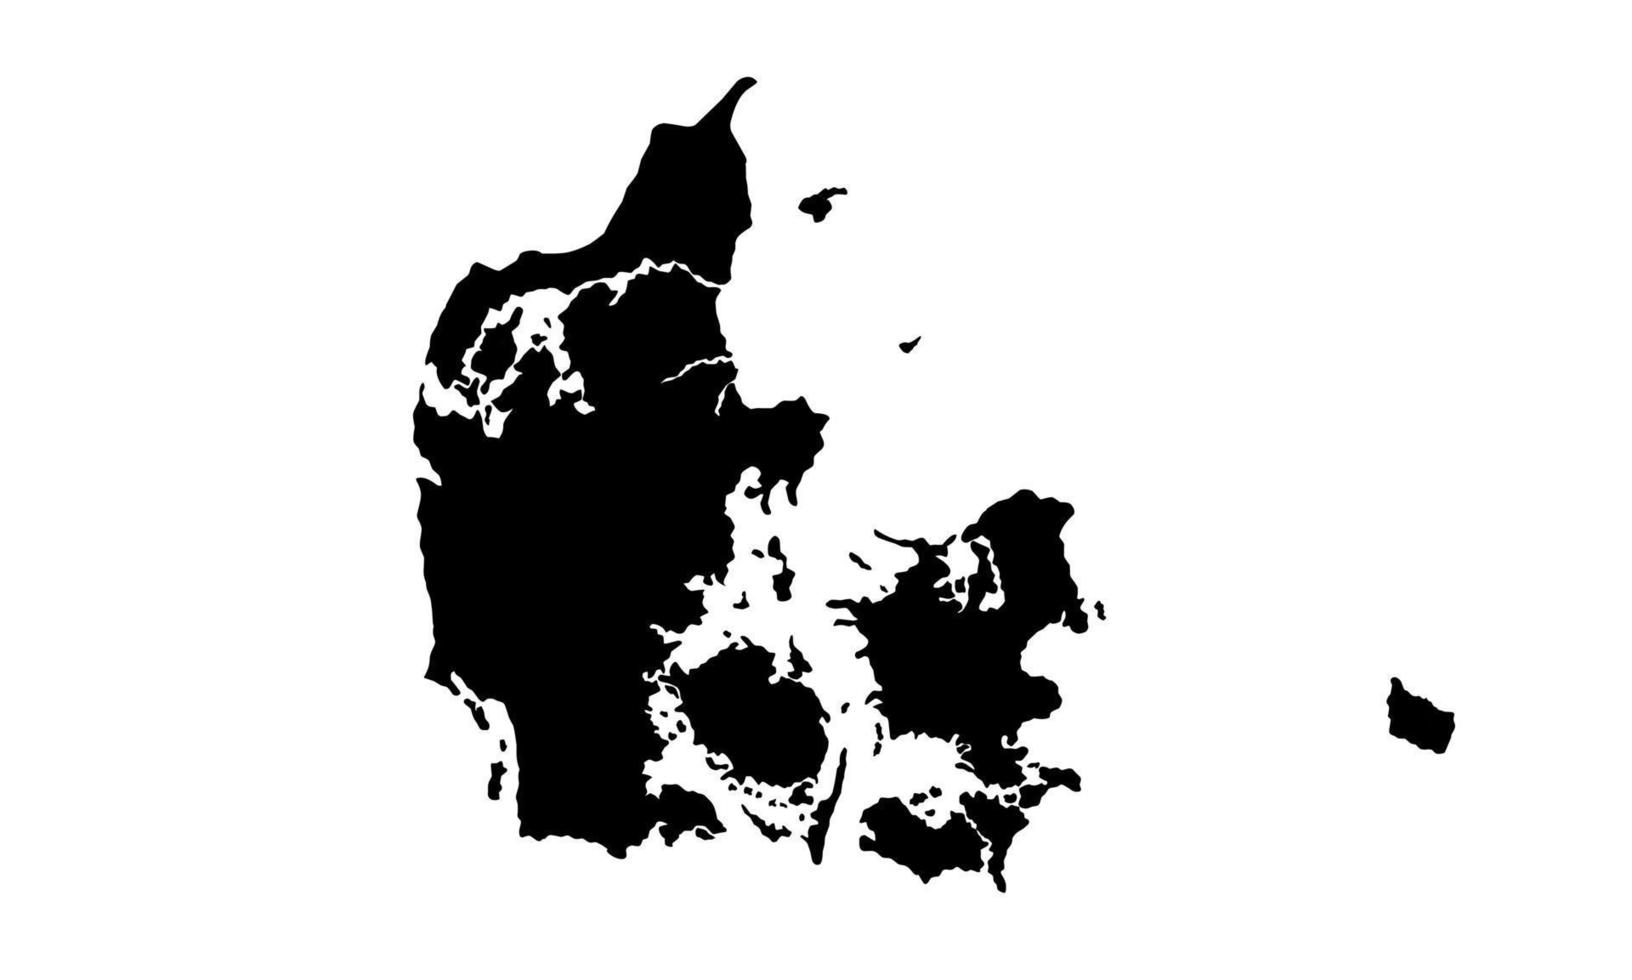 Dinamarca mapa silueta negra sobre fondo blanco. vector